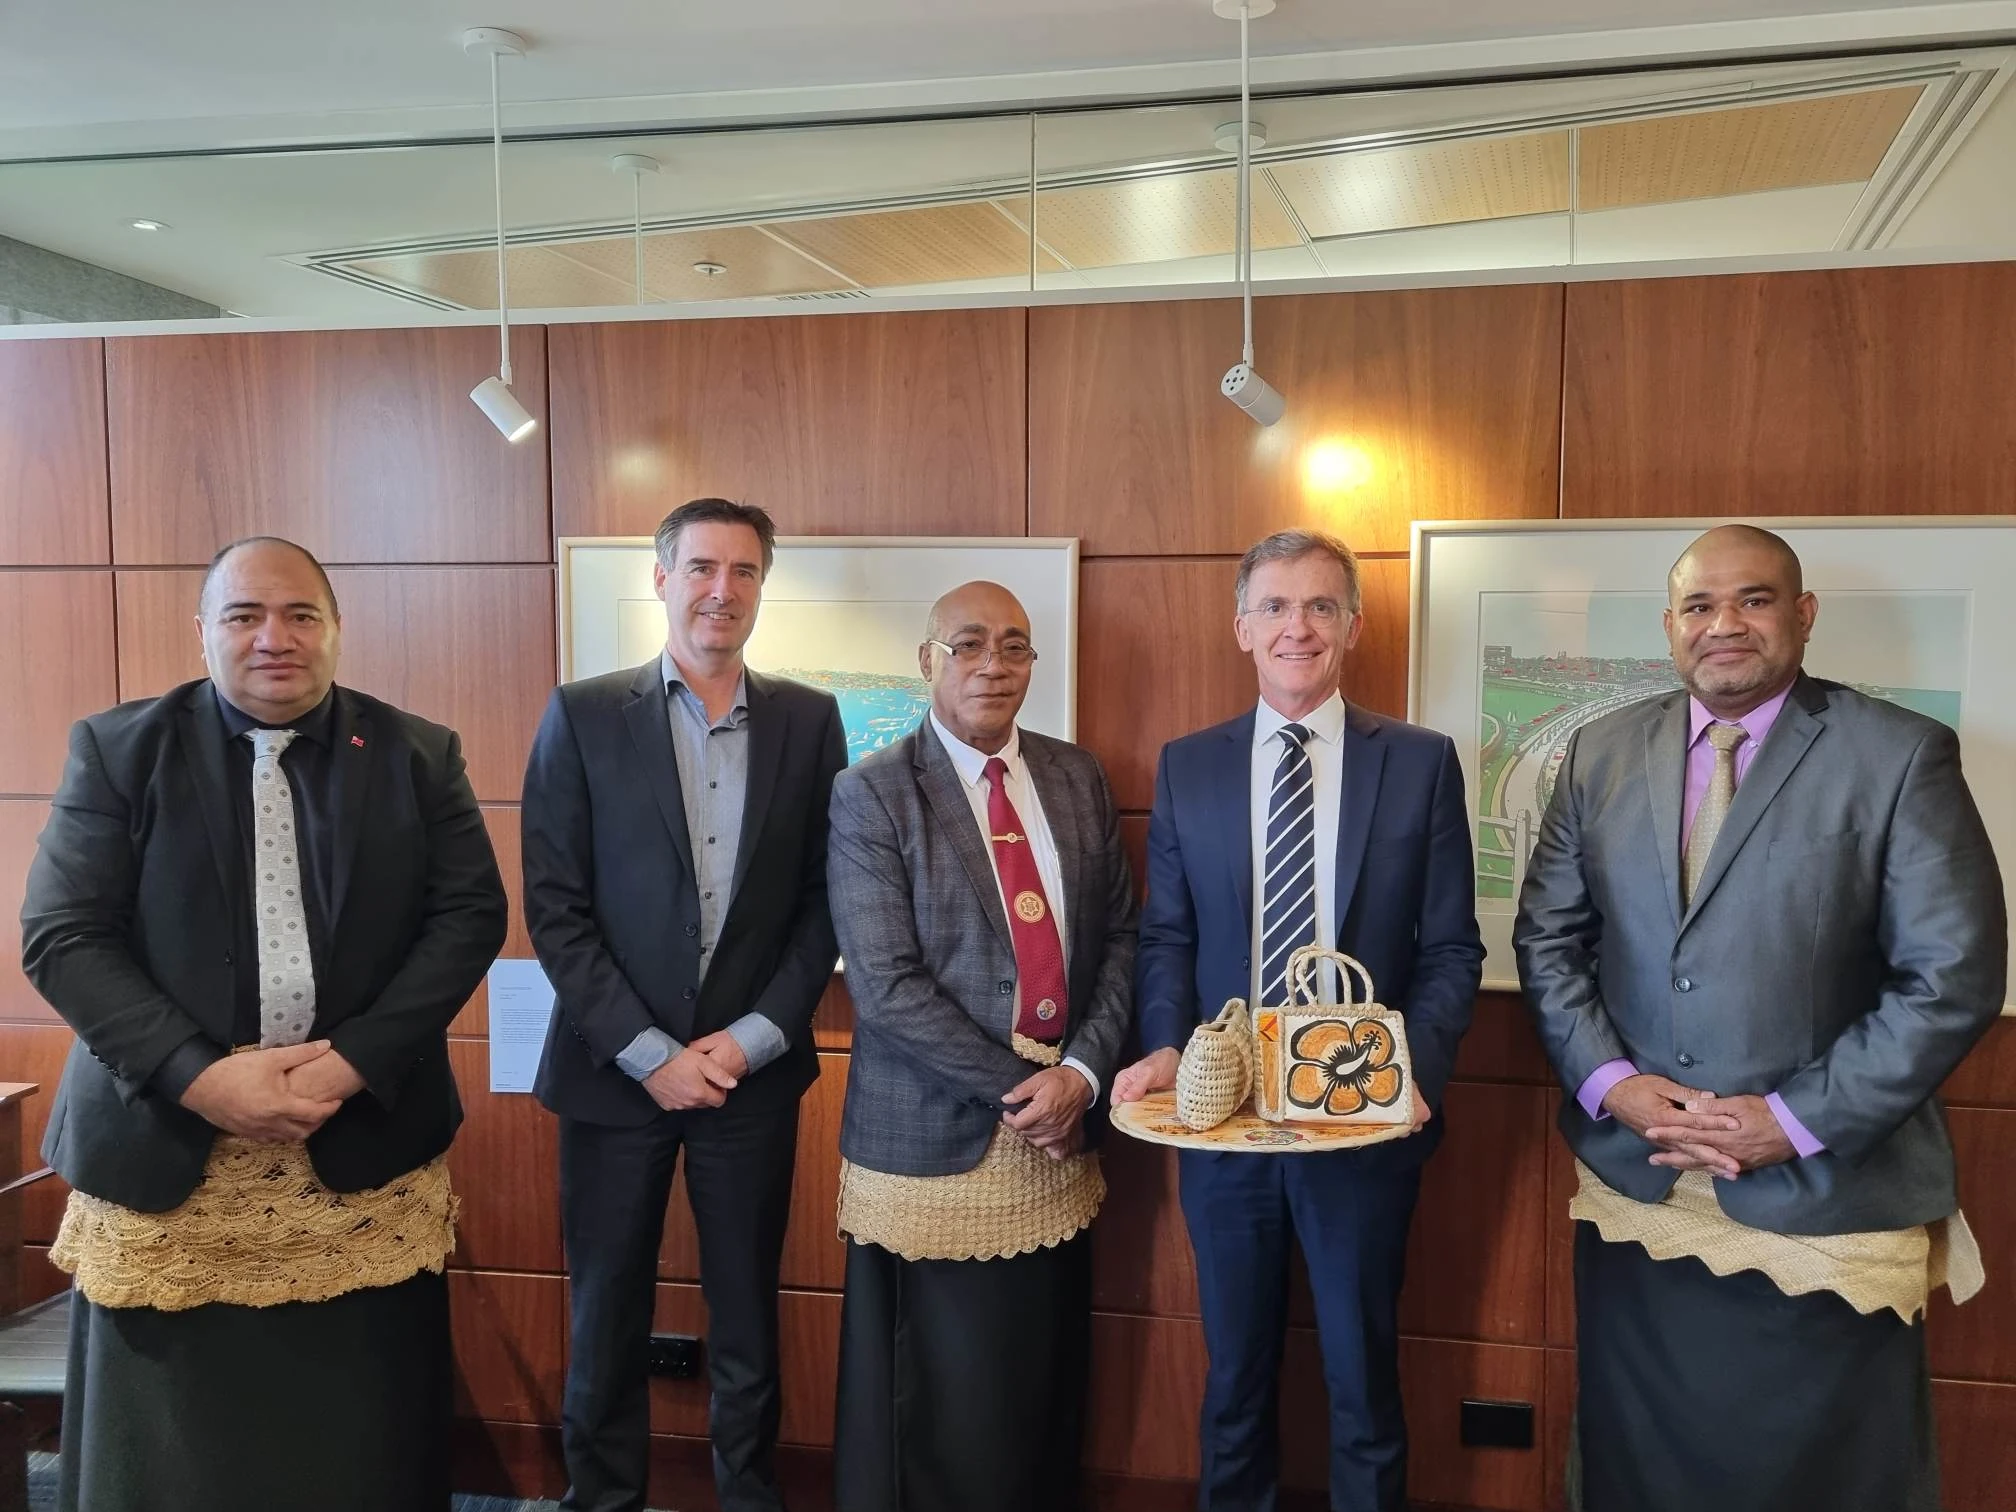 The Tongan dignitaries with DFAT Australia staff.